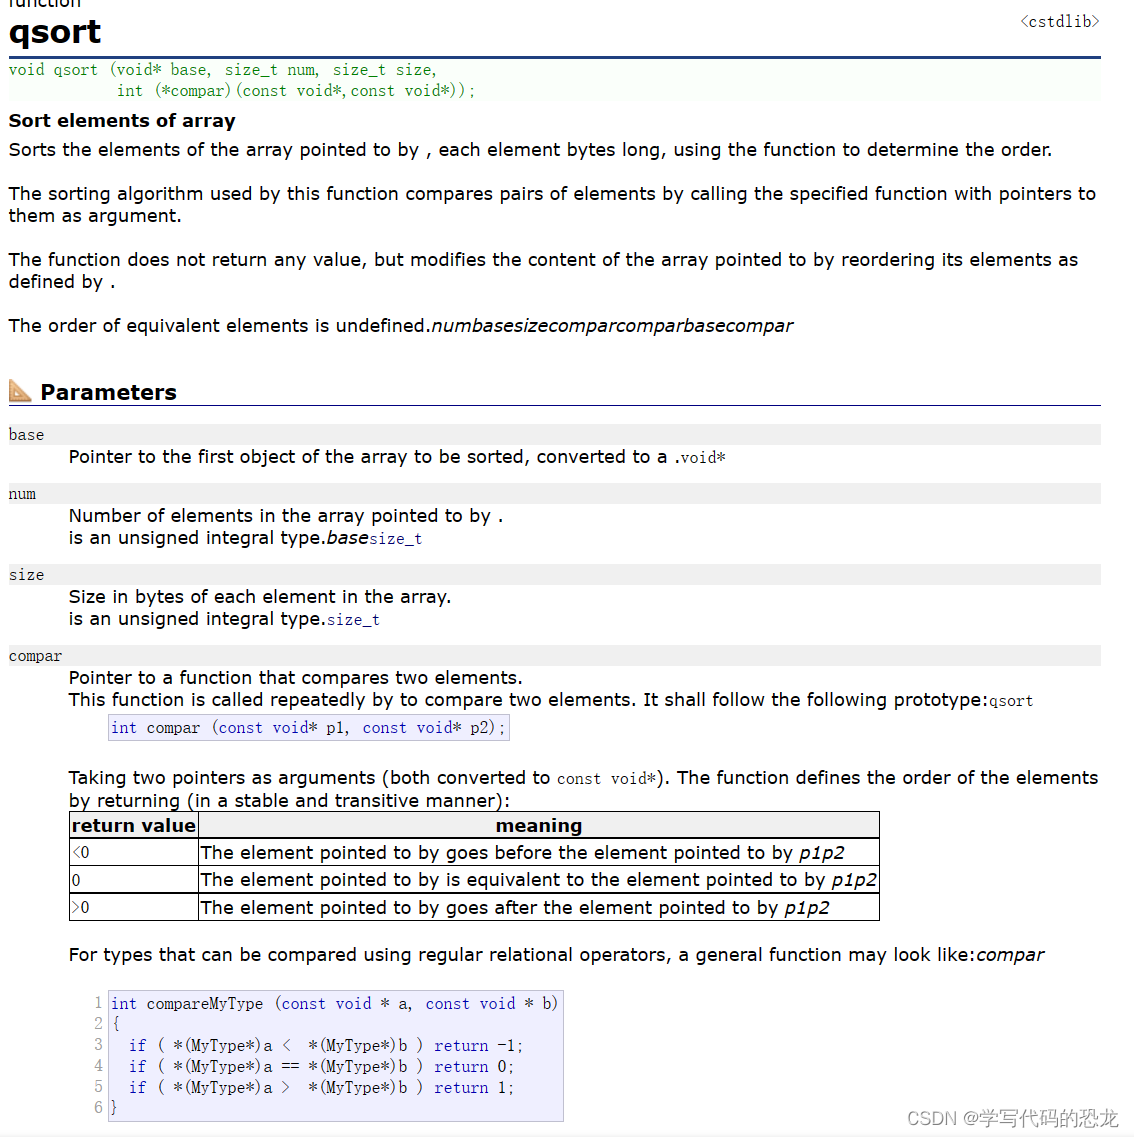 【C语言进阶】qsort函数详解以及它的模拟实现（一）